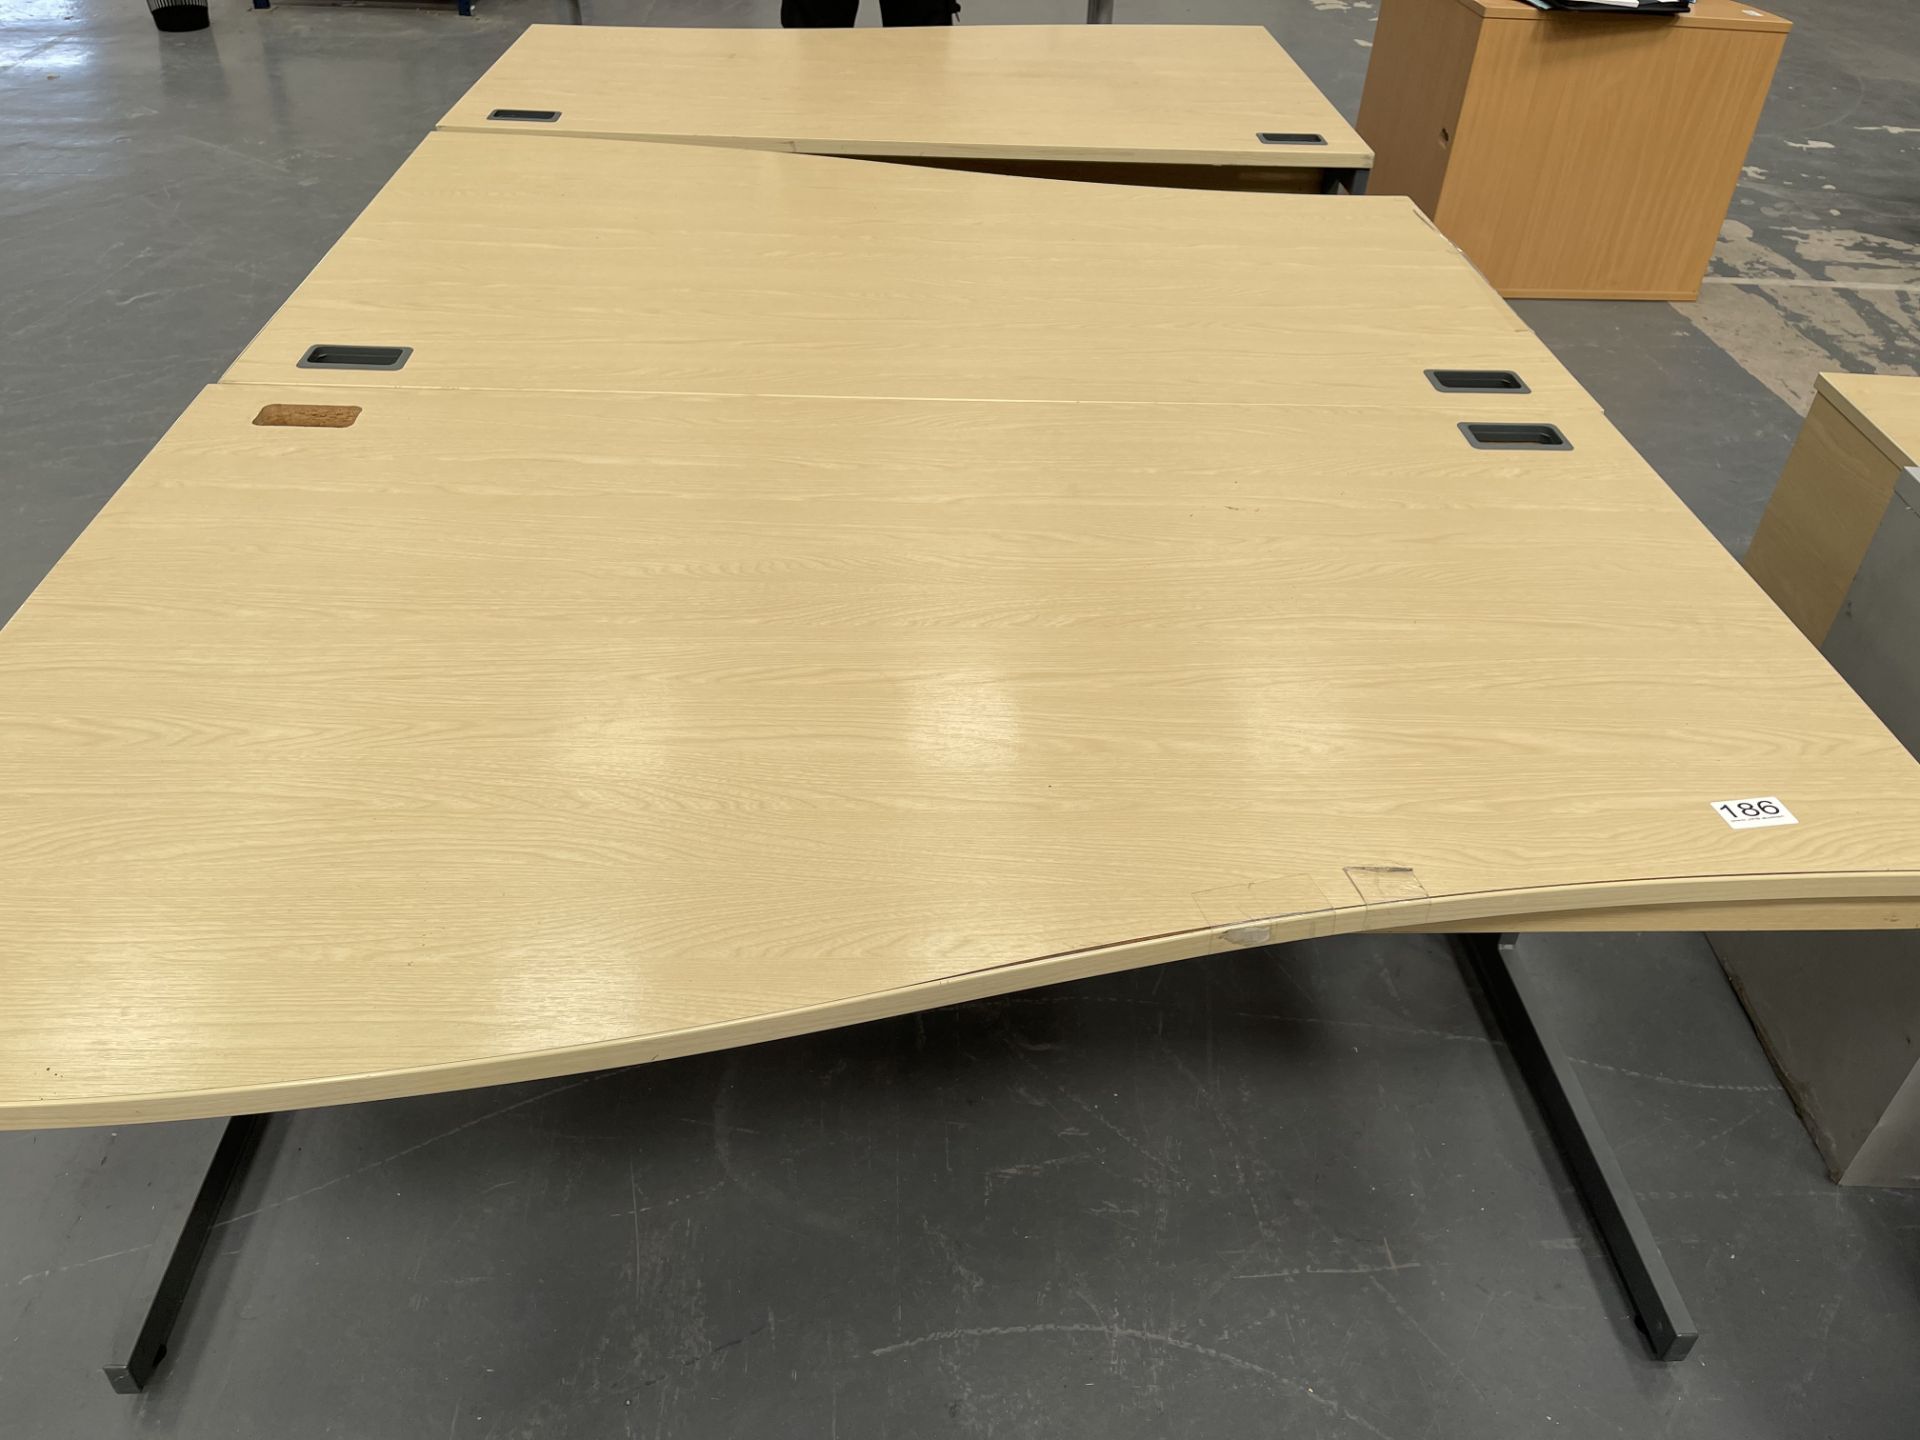 3 x Wooden Effect Work/Office Desks | 100cm x 160cm x 72cm